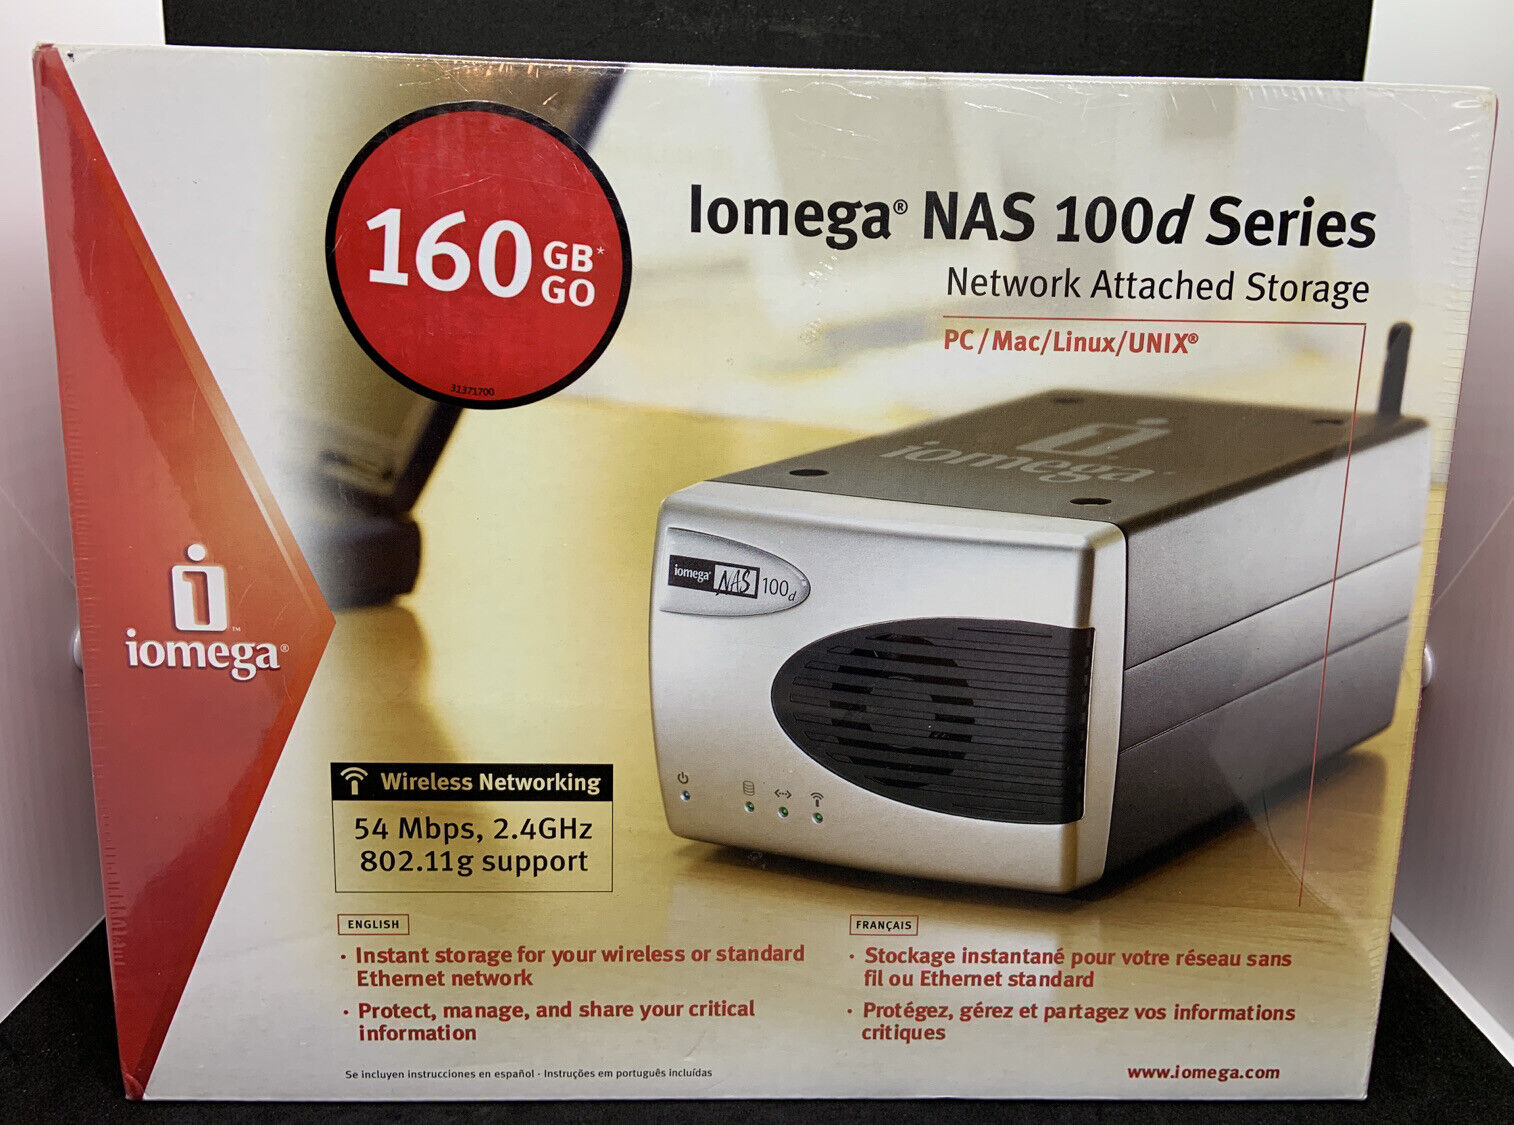 Iomega NAS 100d Series 160GB Network Attached Storage Wireless PC/Mac/Linux/UNIX